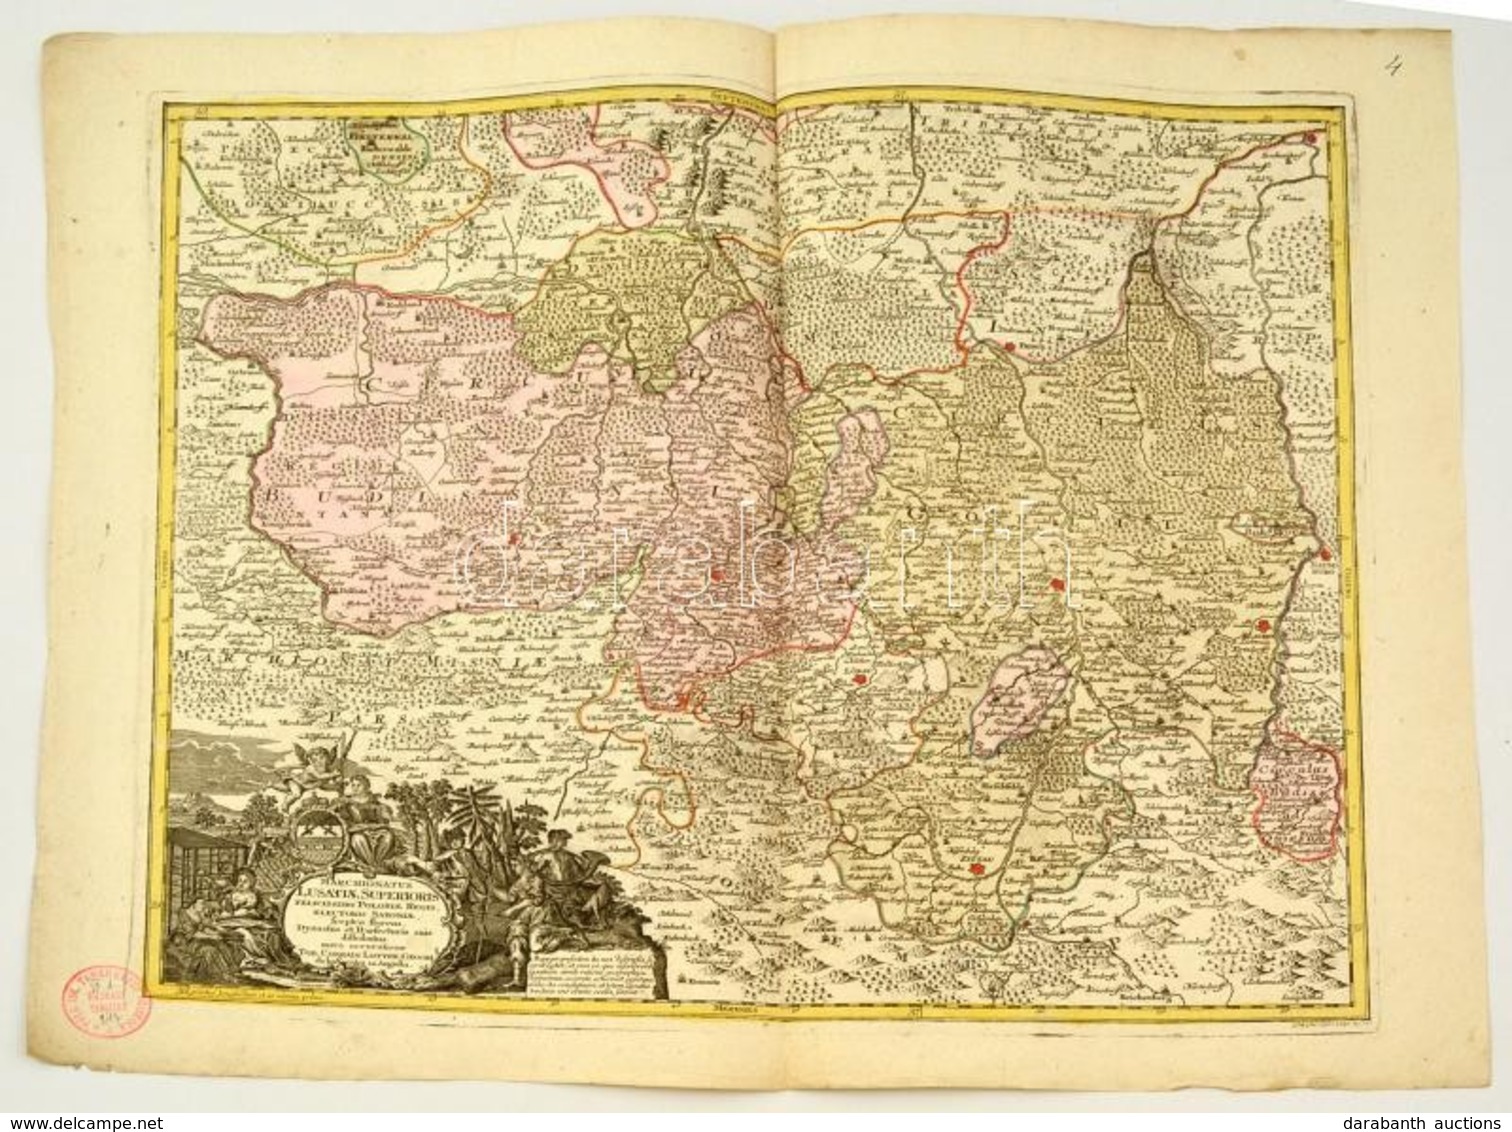 Lotter, Tobias Conrad: (1717-1777): Felső Lausitz Hercegség Rézmetszetű Térképe. Marchionatus Lusatiae Superioris Bohemi - Estampes & Gravures